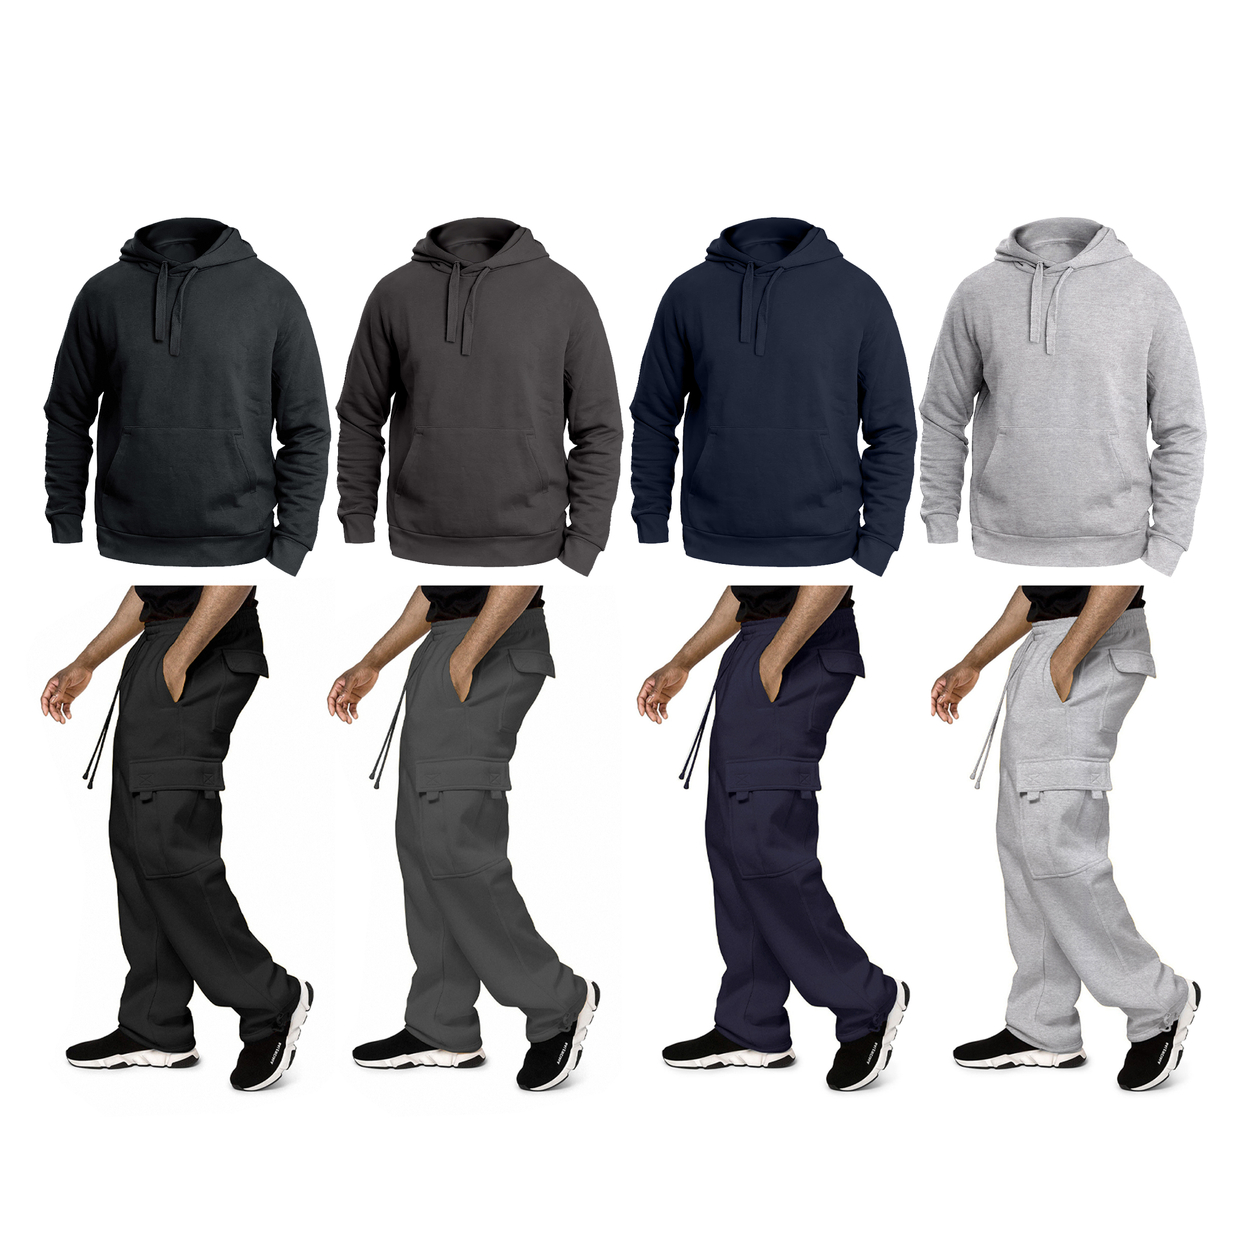 2-Pack: Men's Big & Tall Winter Warm Cozy Athletic Fleece Lined Multi-Pocket Cargo Sweatsuit - Black, Medium